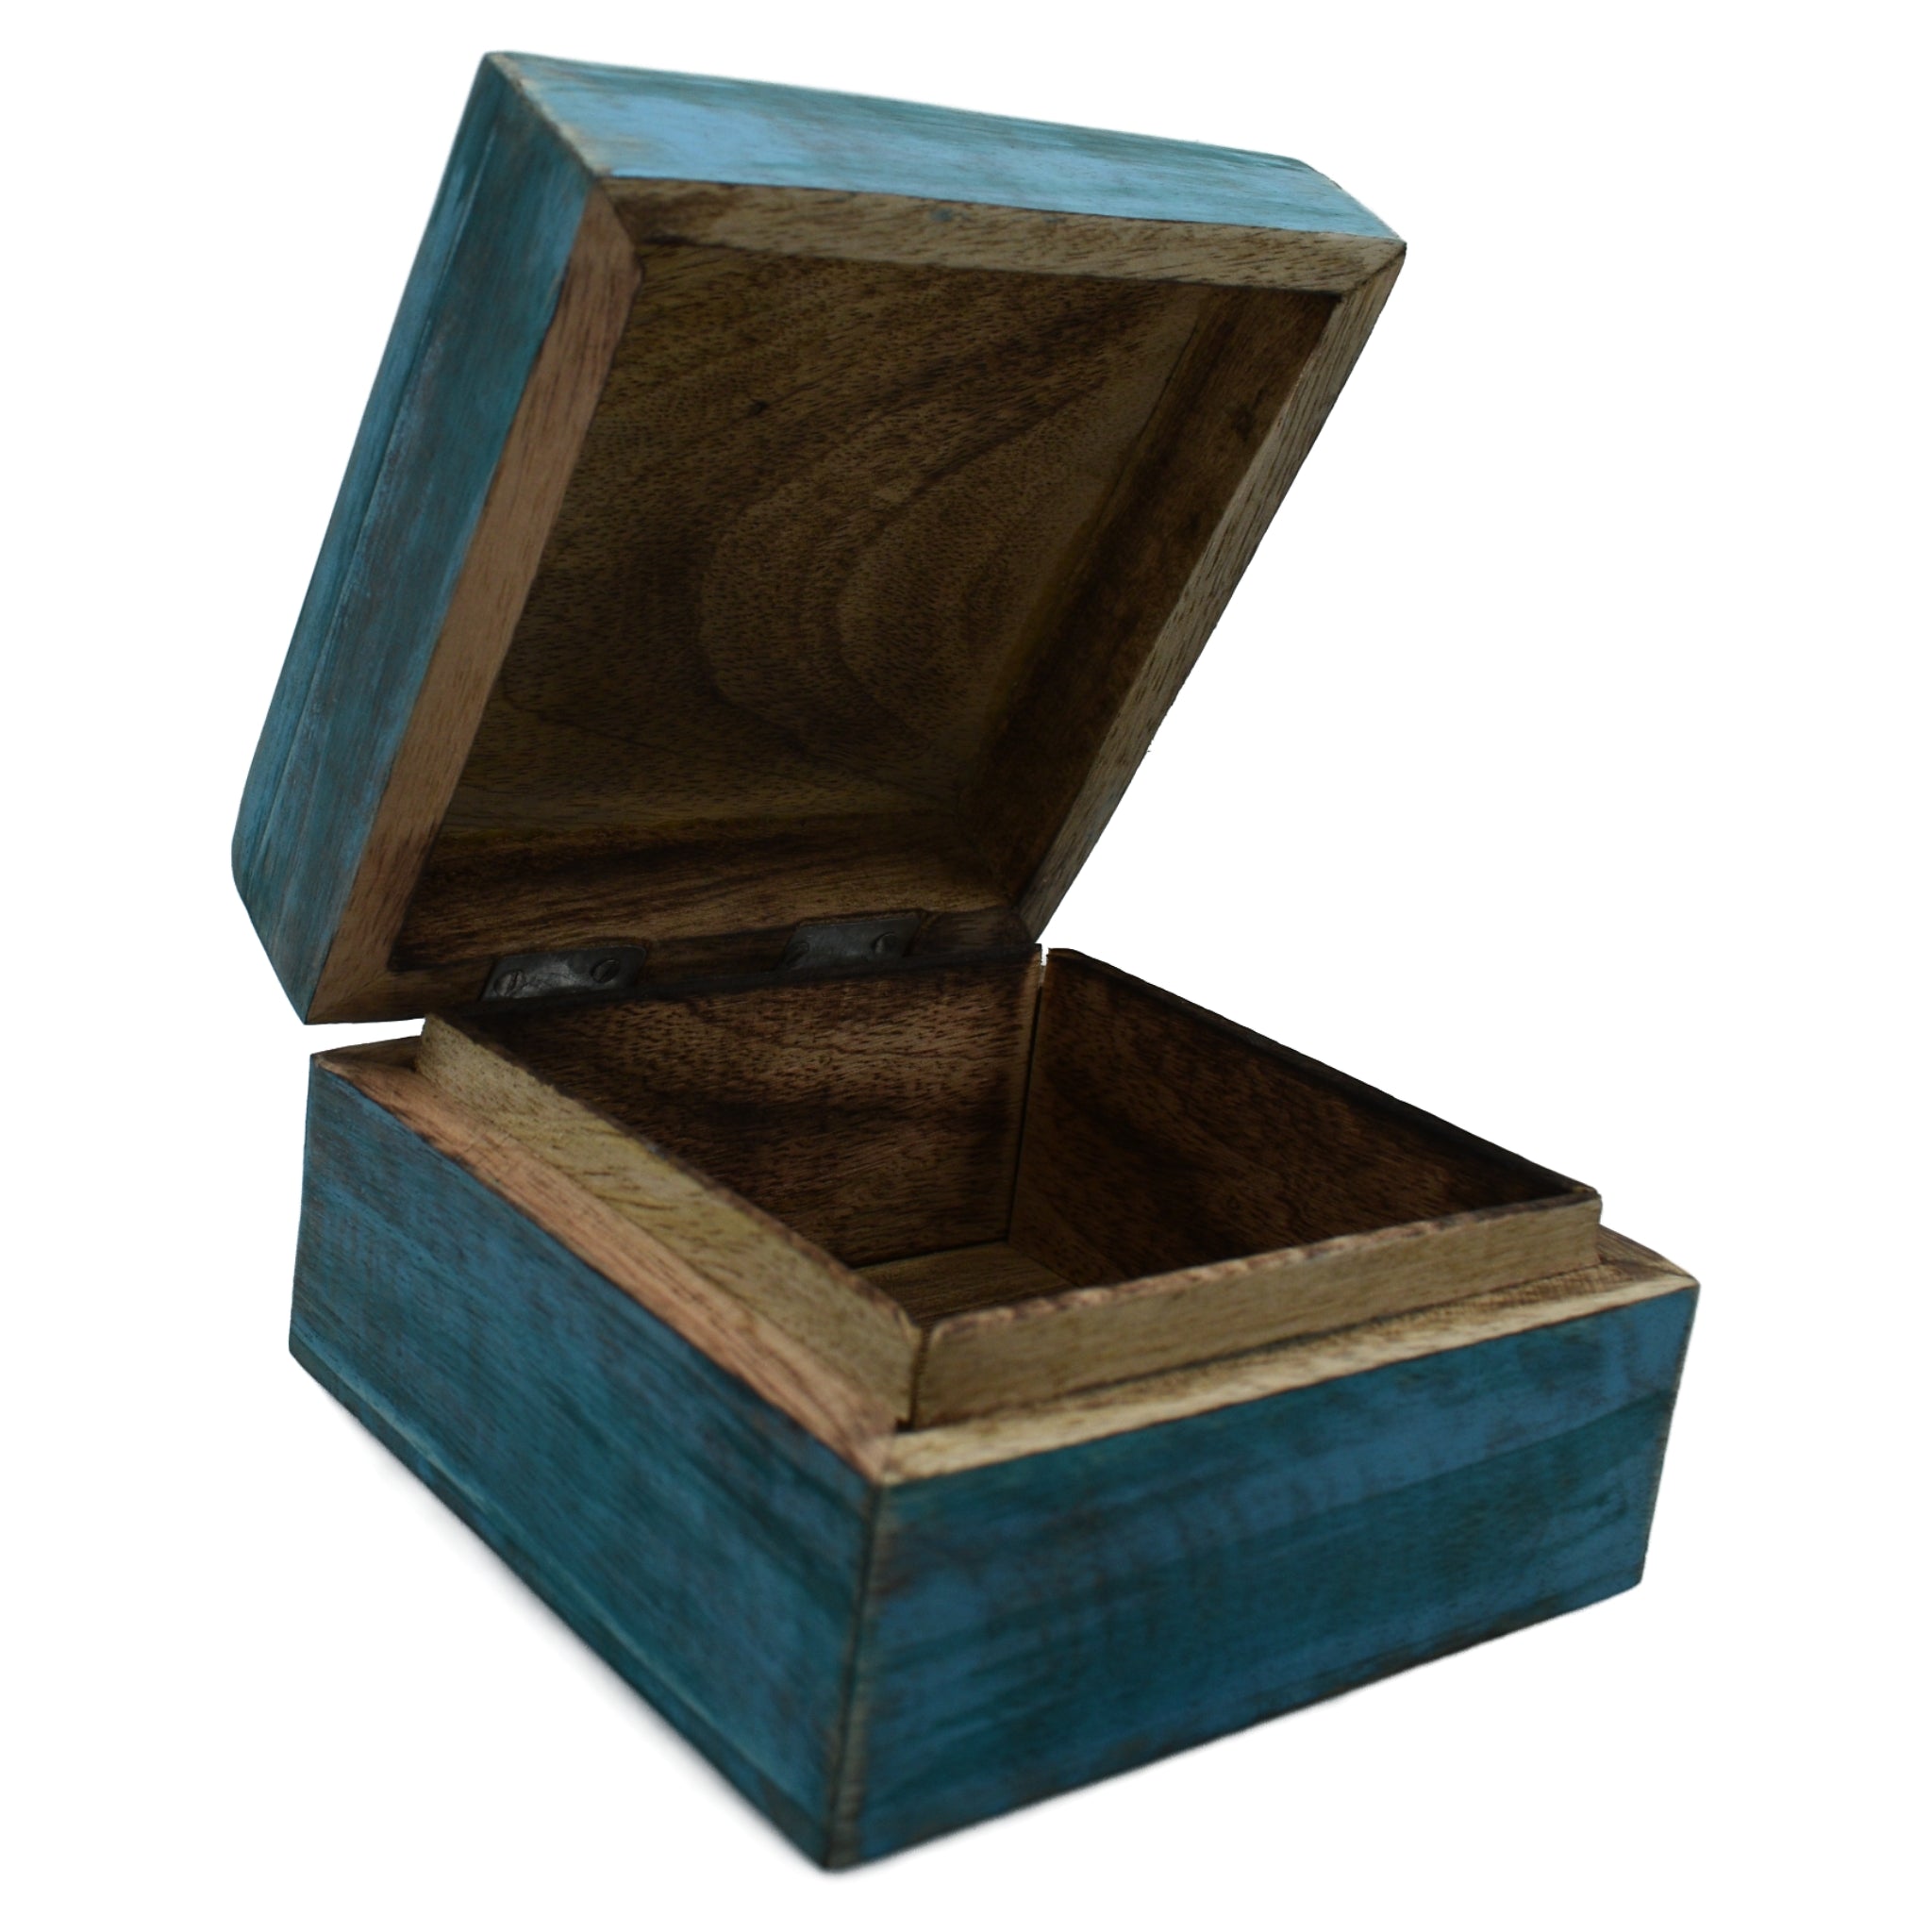 Open box, natural wood inside 